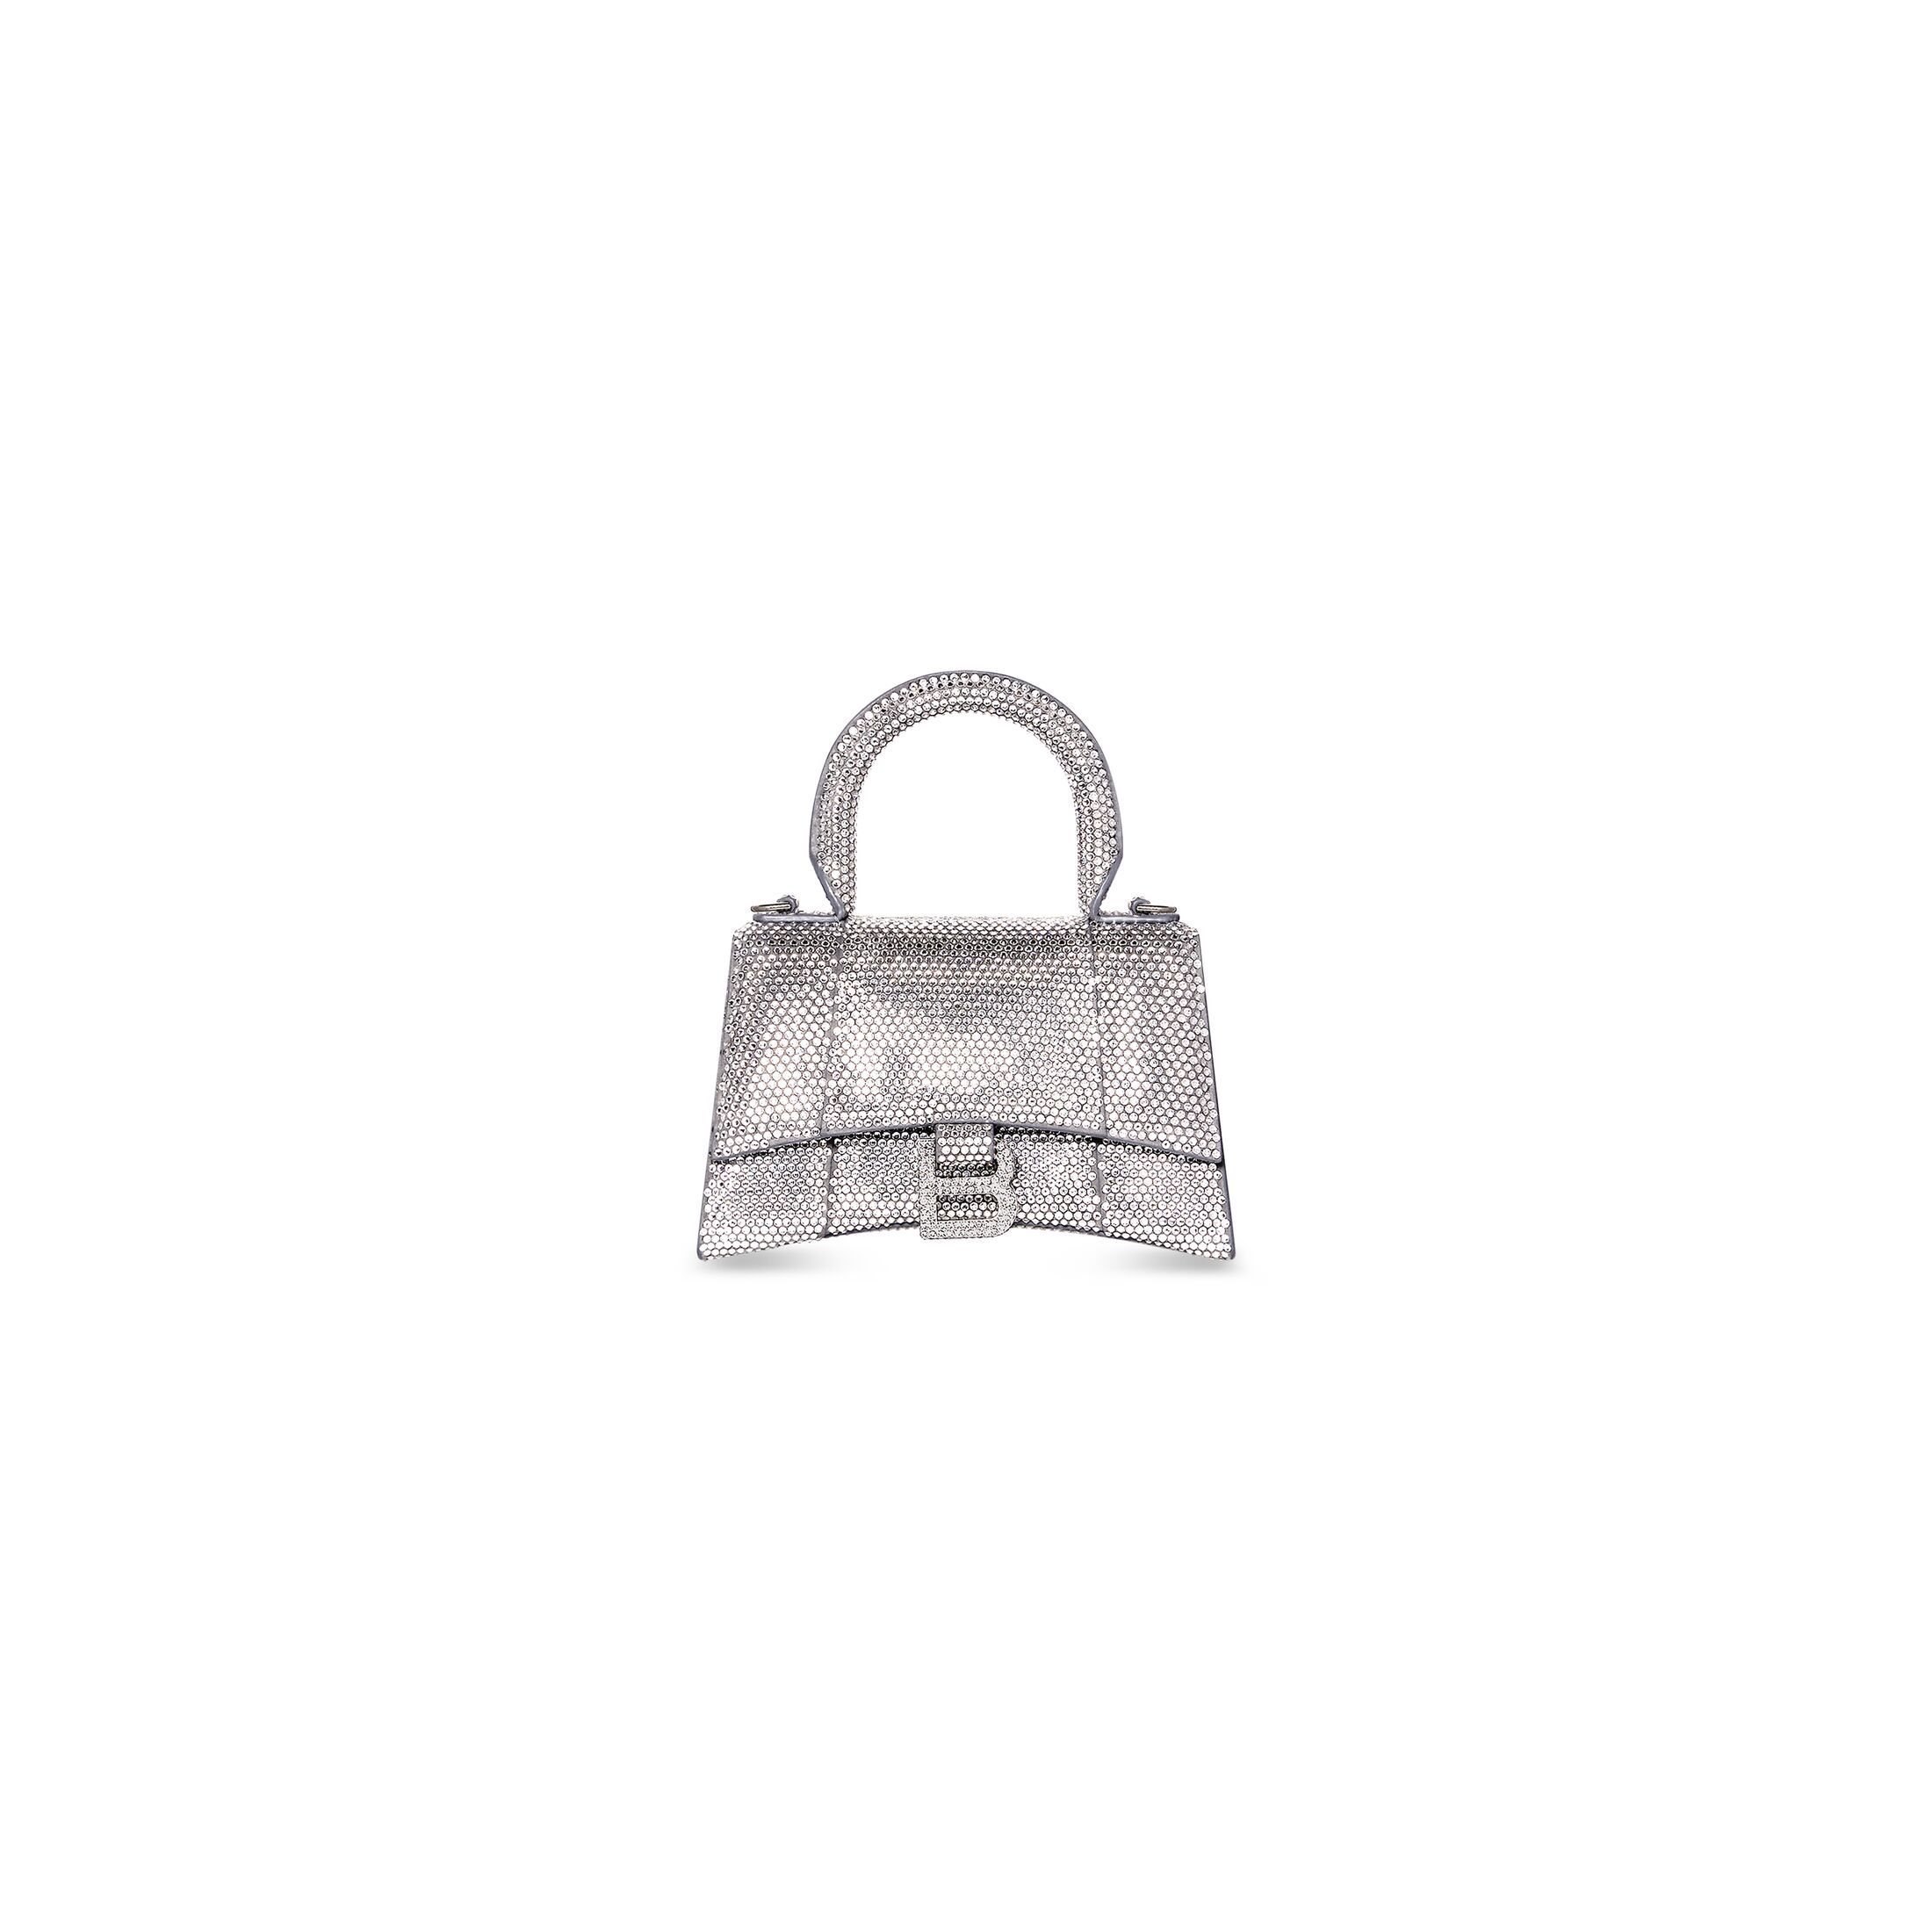 Hourglass XS Handbag in grey suede calfskin with rhinestones, aged silver hardware | Balenciaga